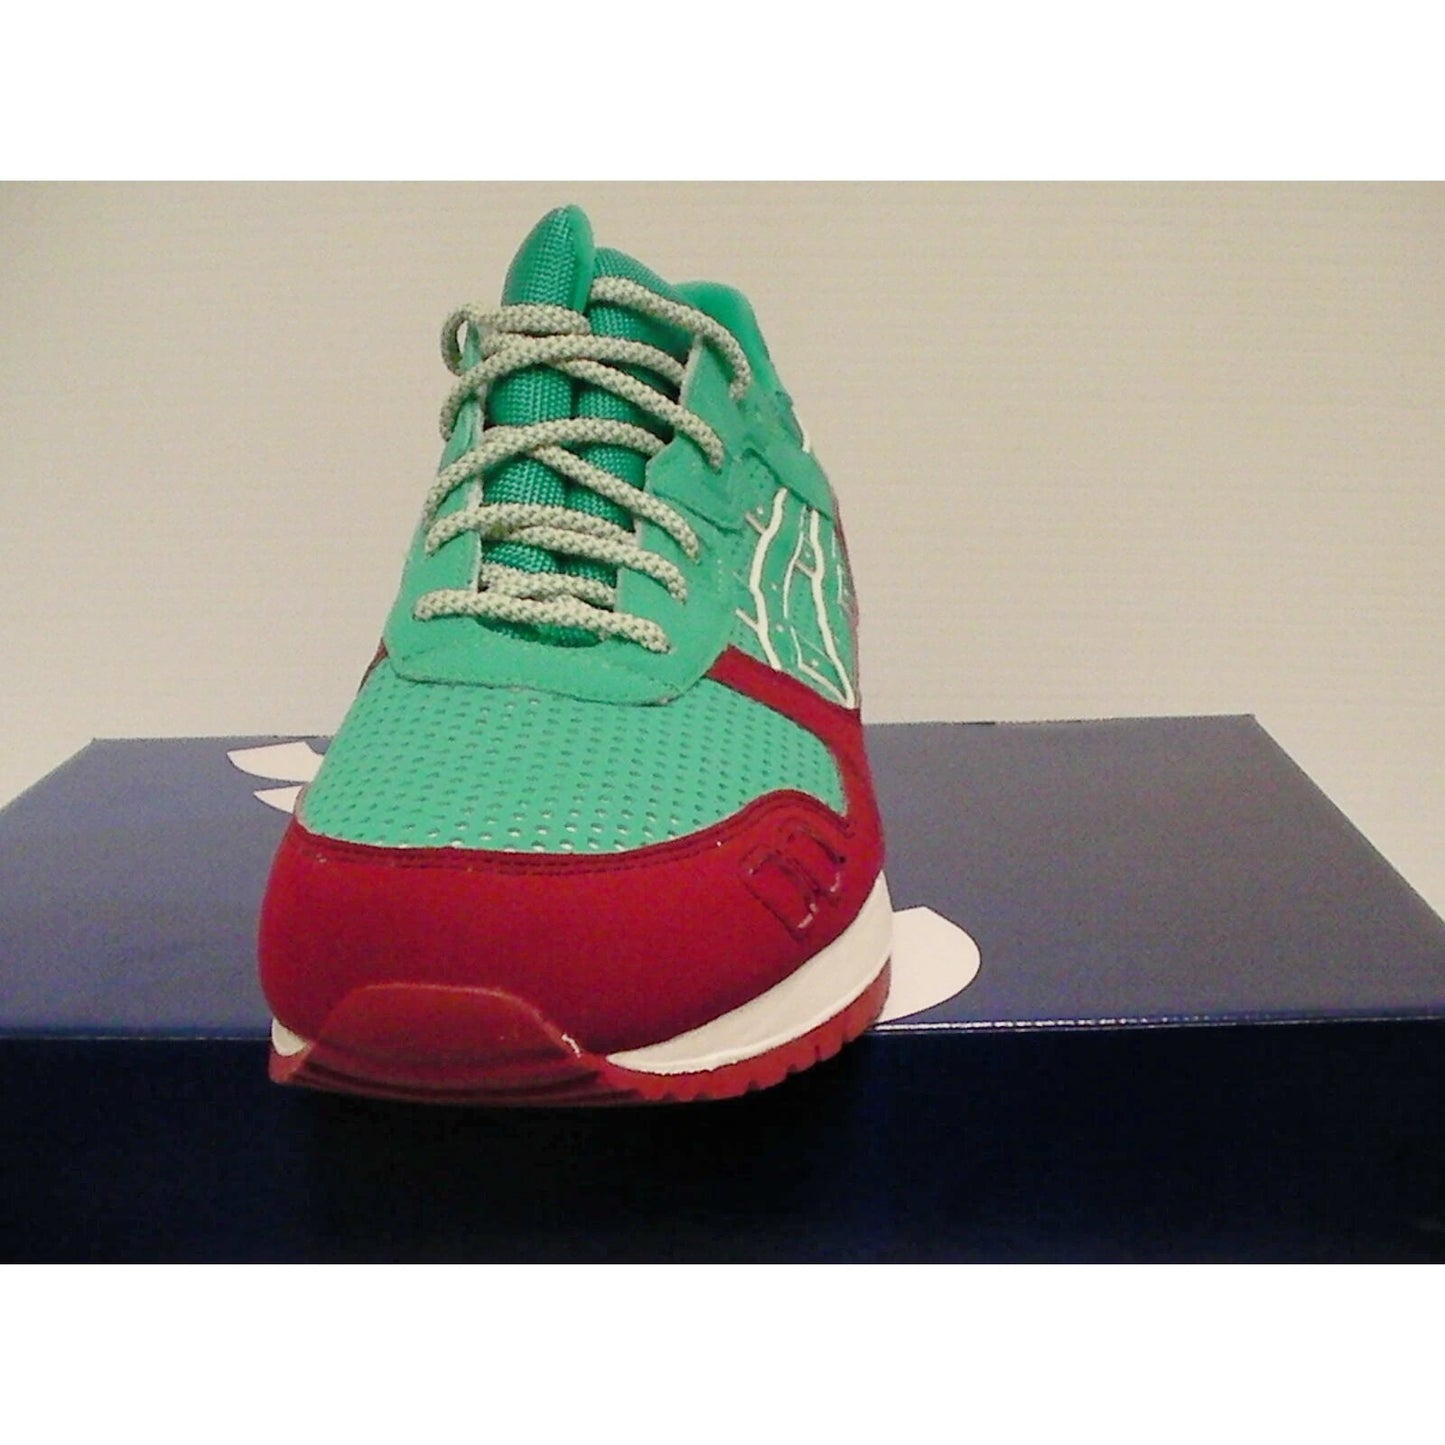 Asics men running shoes gel-lyte iii size 9.5 us spectra green new